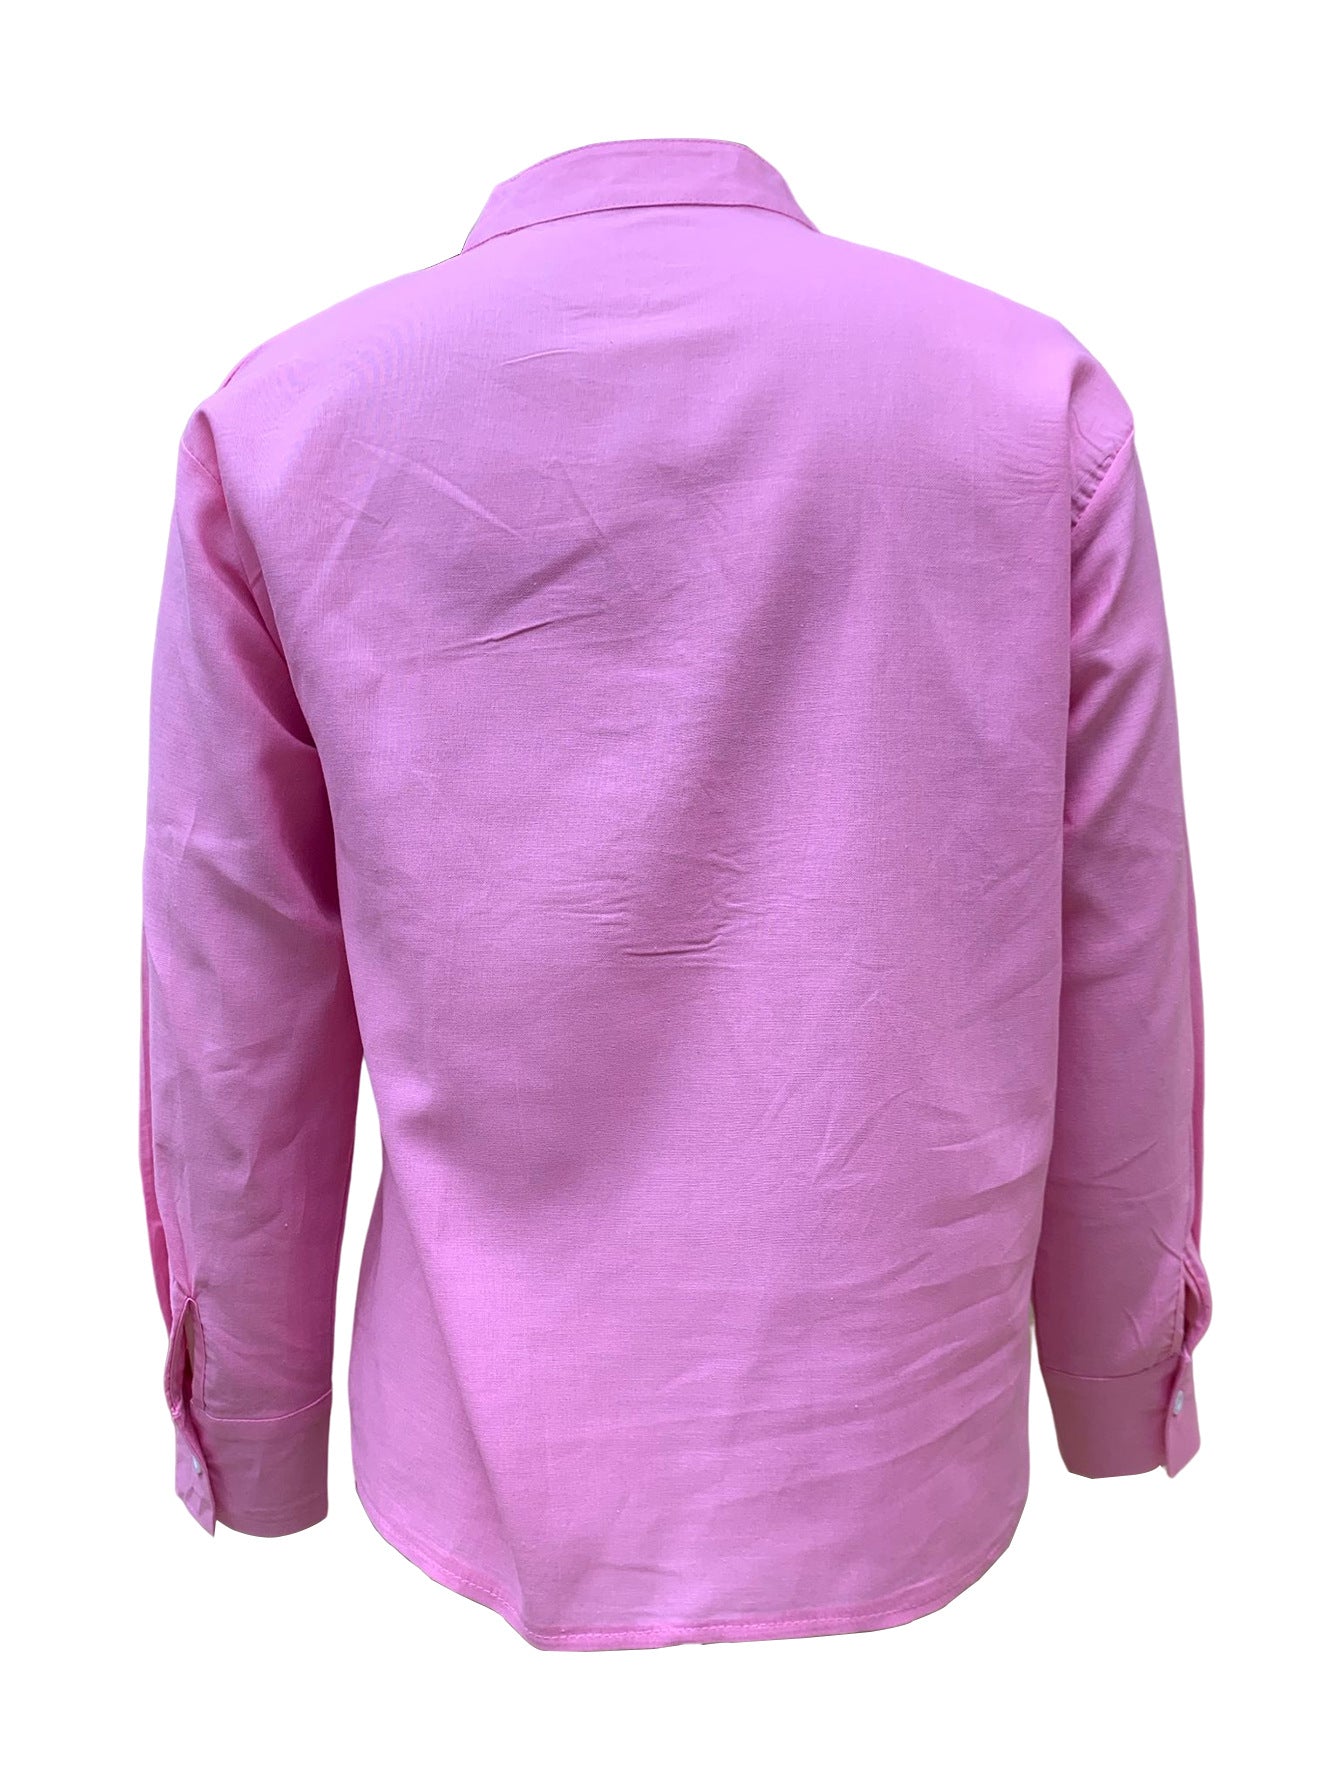 NTG Fad Shirts & Tops Stand Collar Casual Cotton Shirt